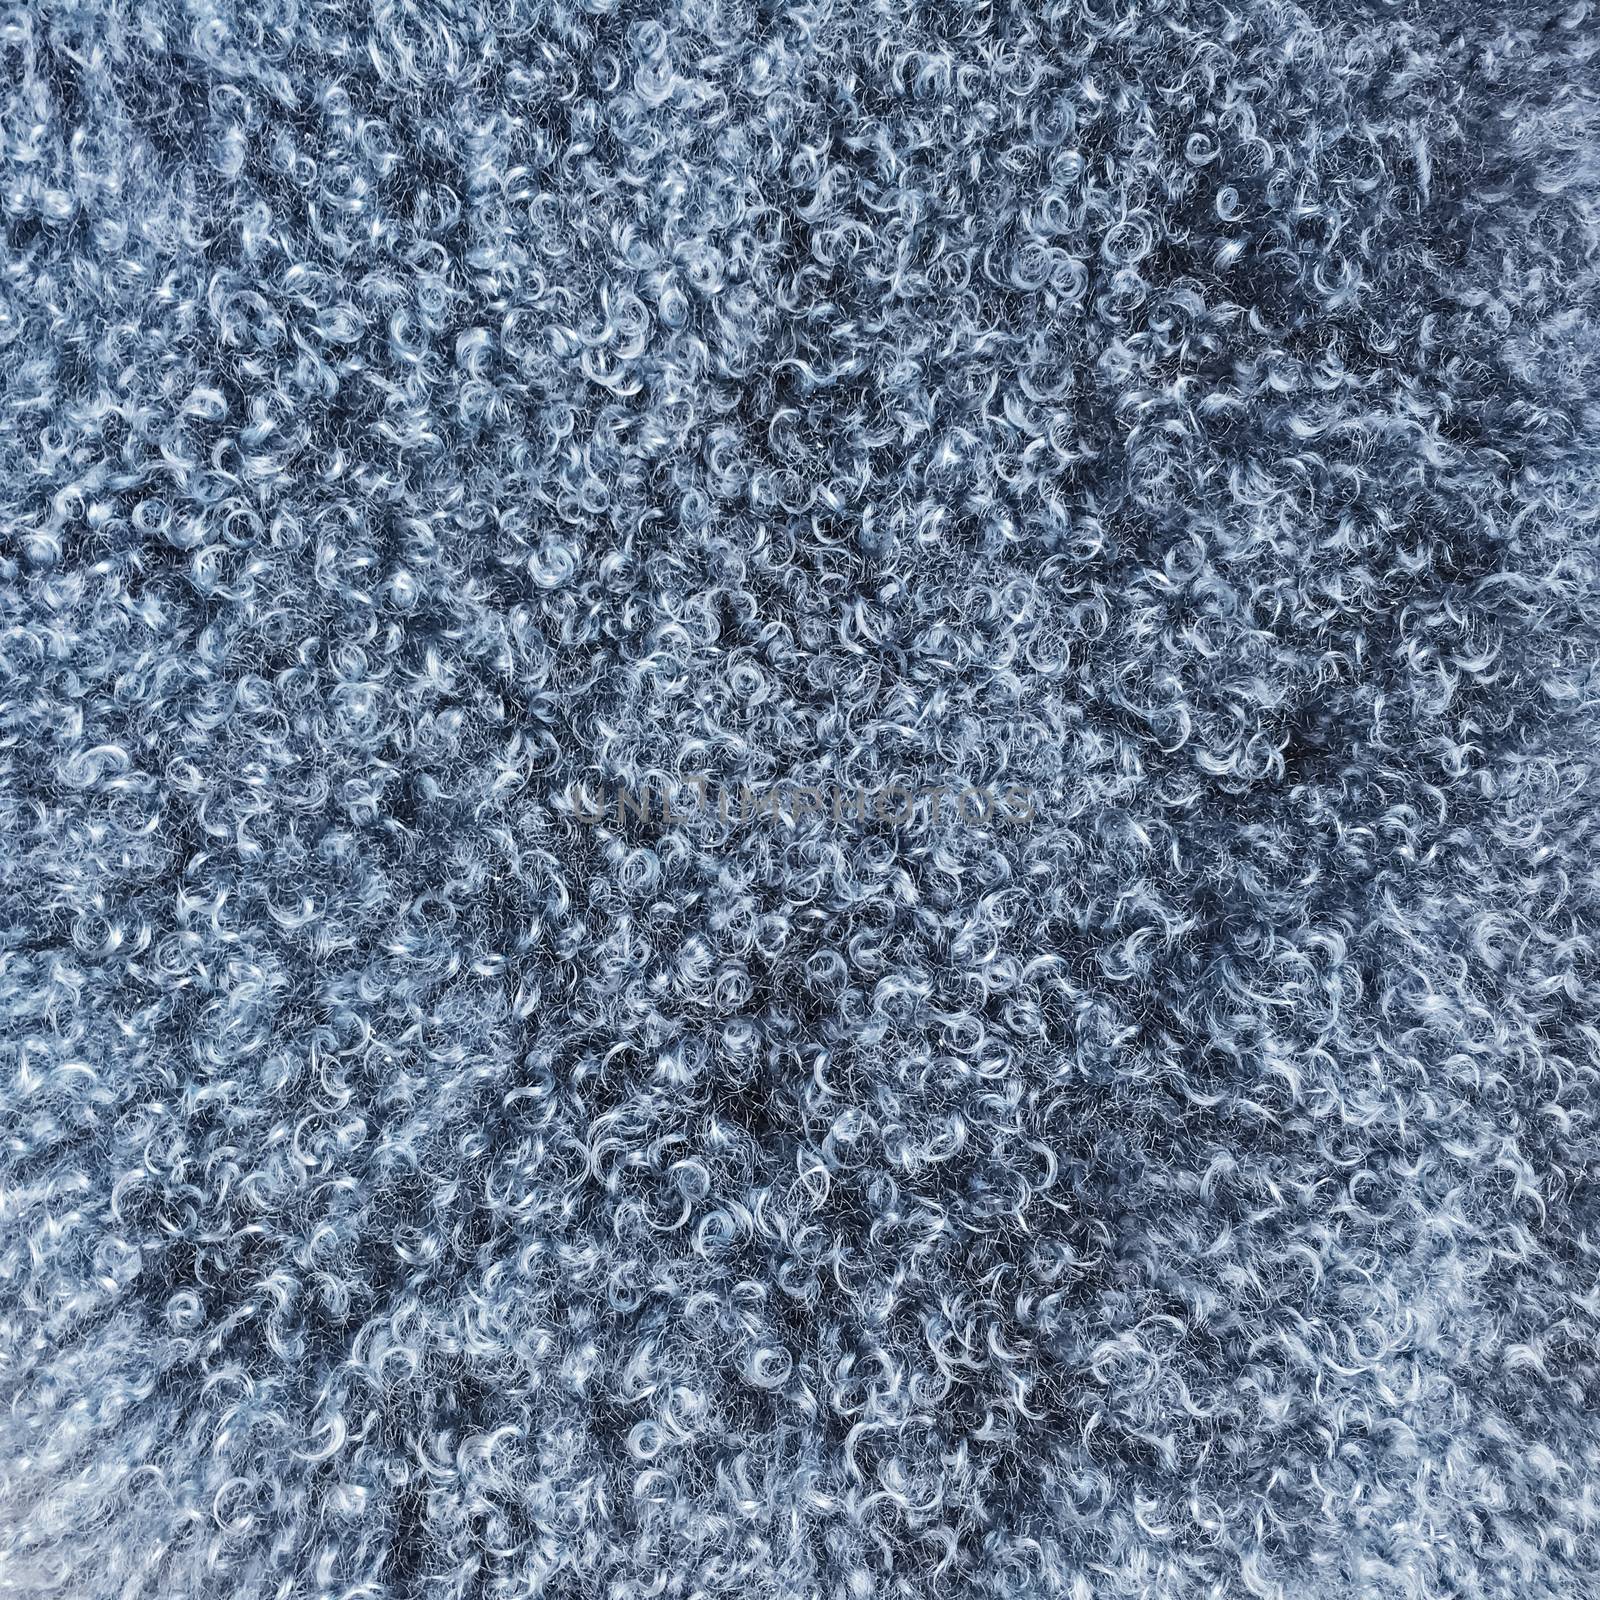 Soft gray sheepskin texture by anikasalsera